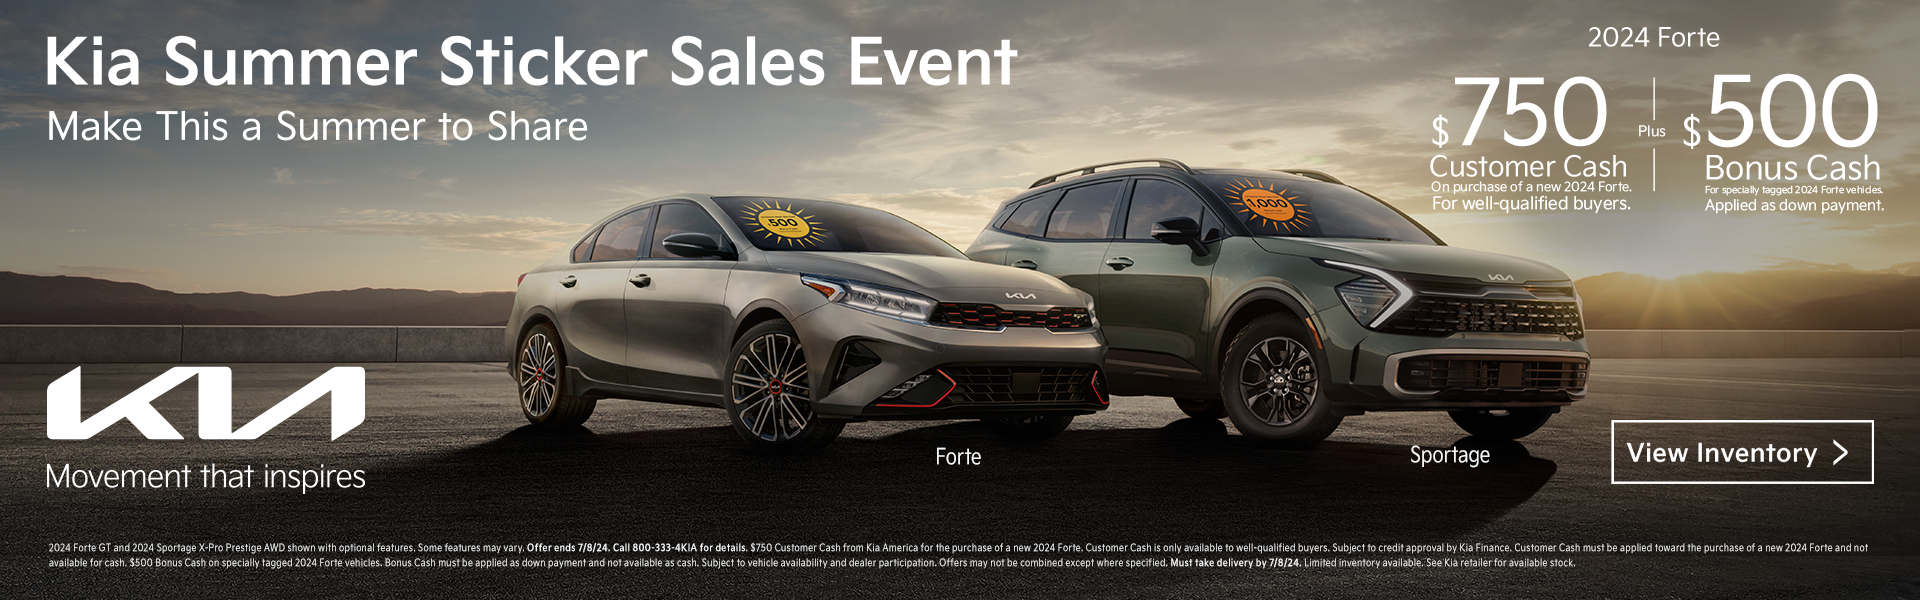 2024 Forte Customer Cash Sticker Sales Event Offer